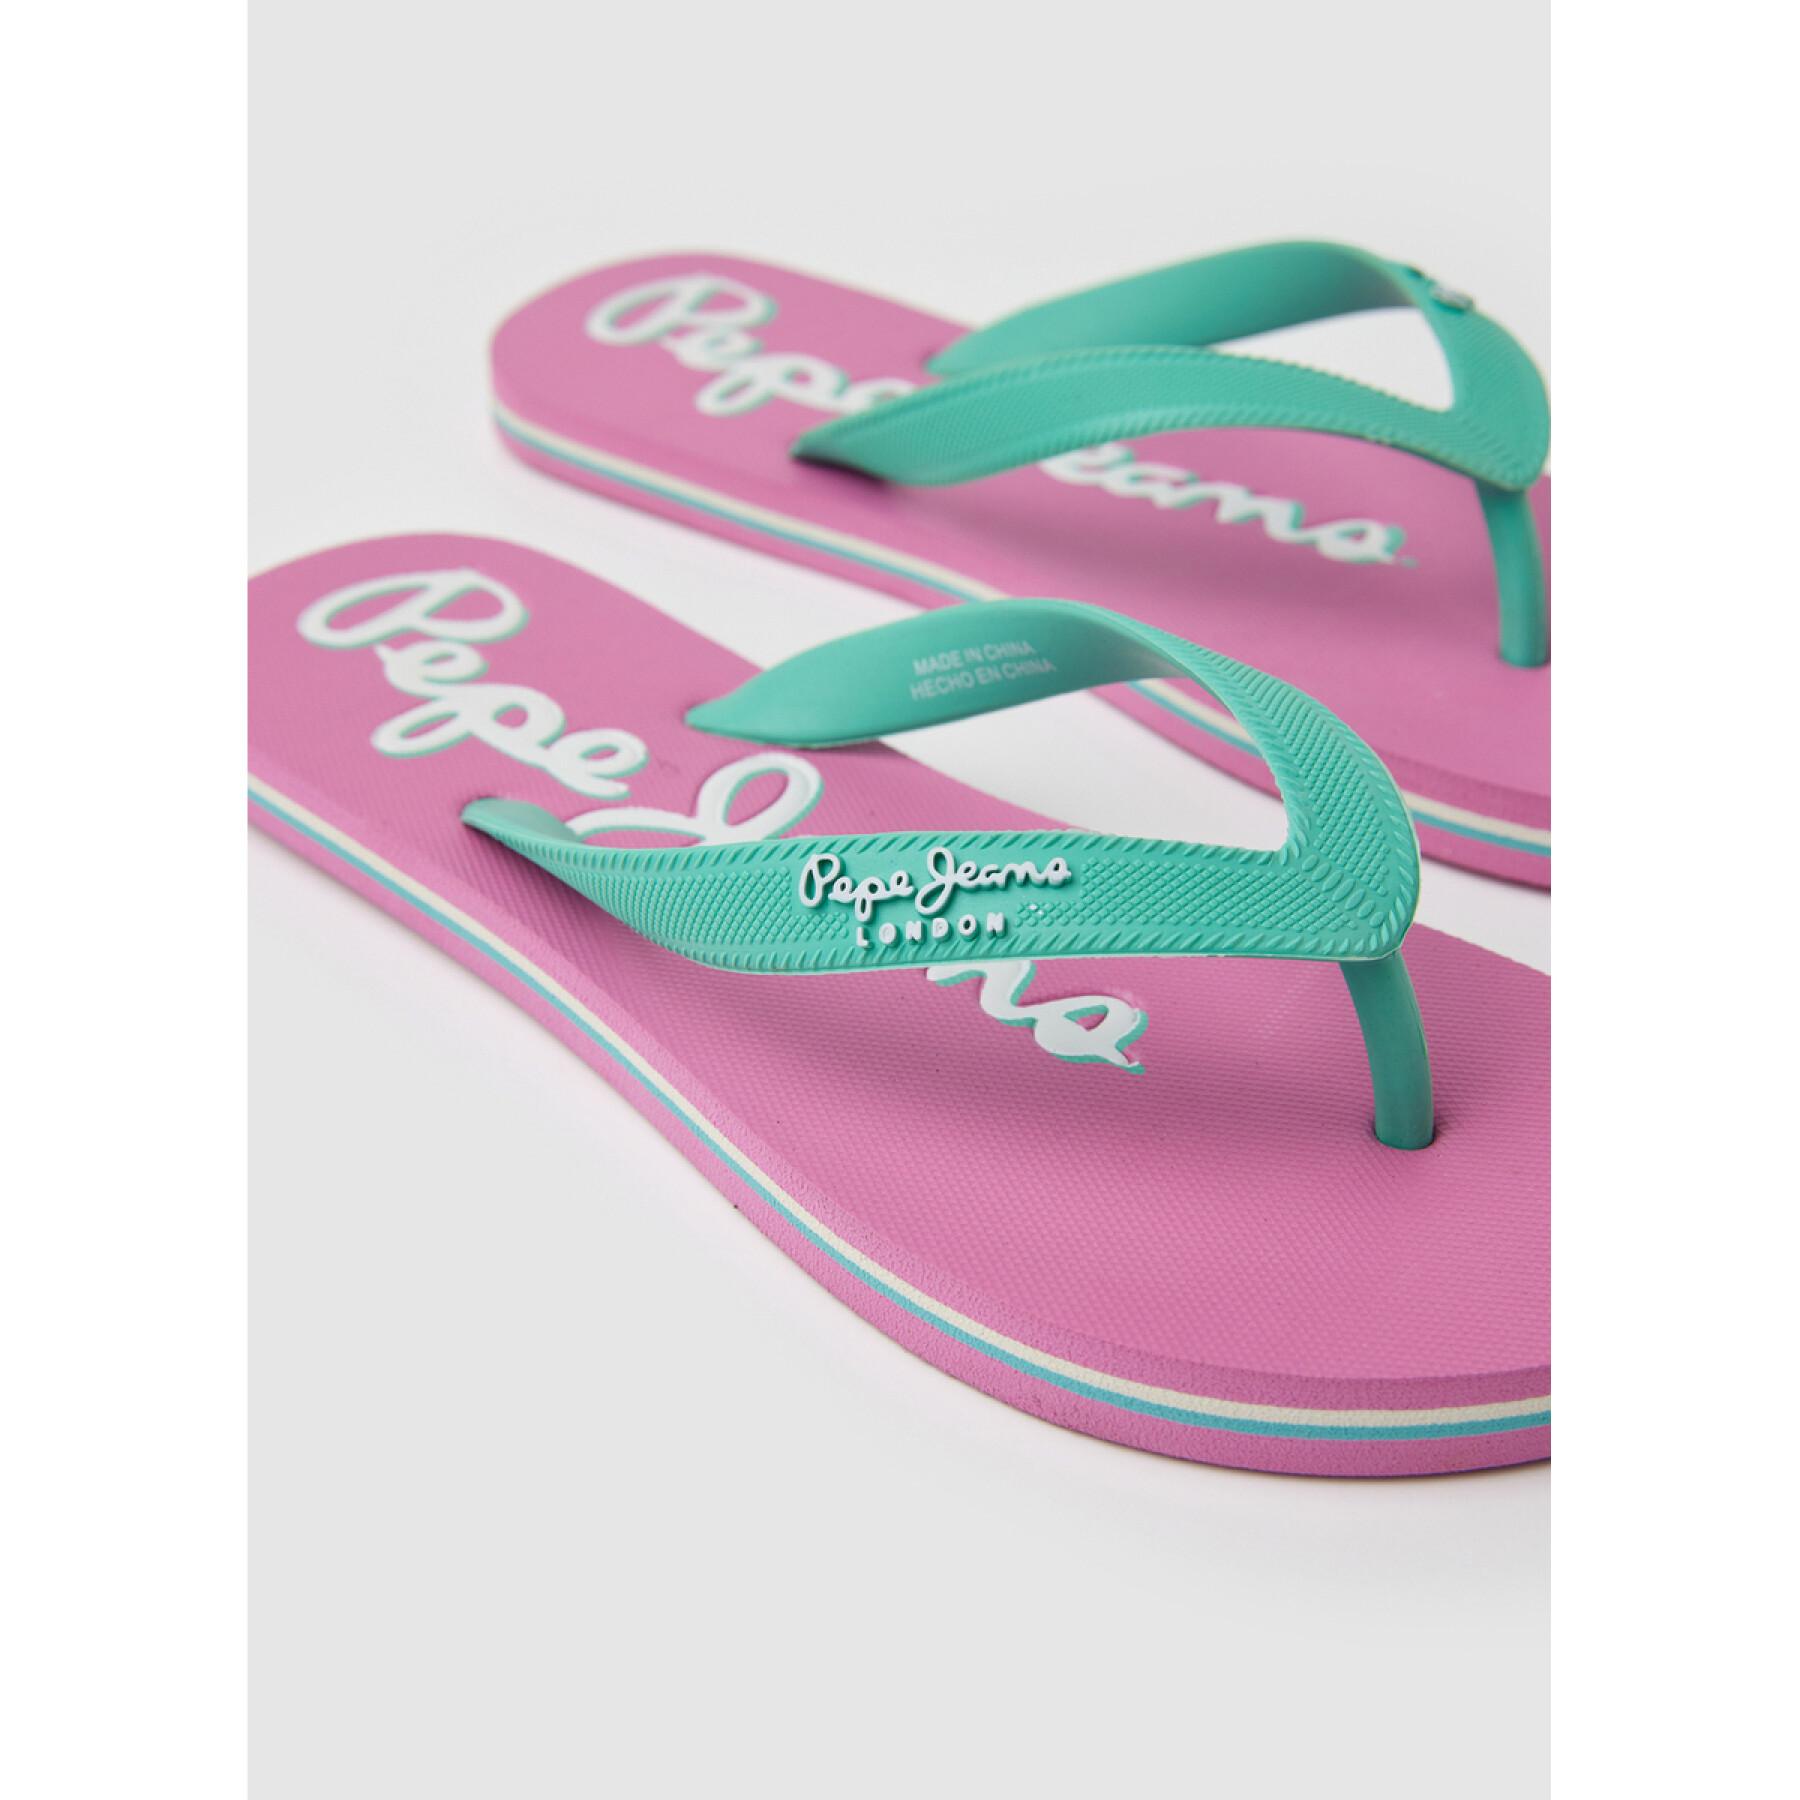 Women's flip-flops Pepe Jeans Bay Beach Claic Brand